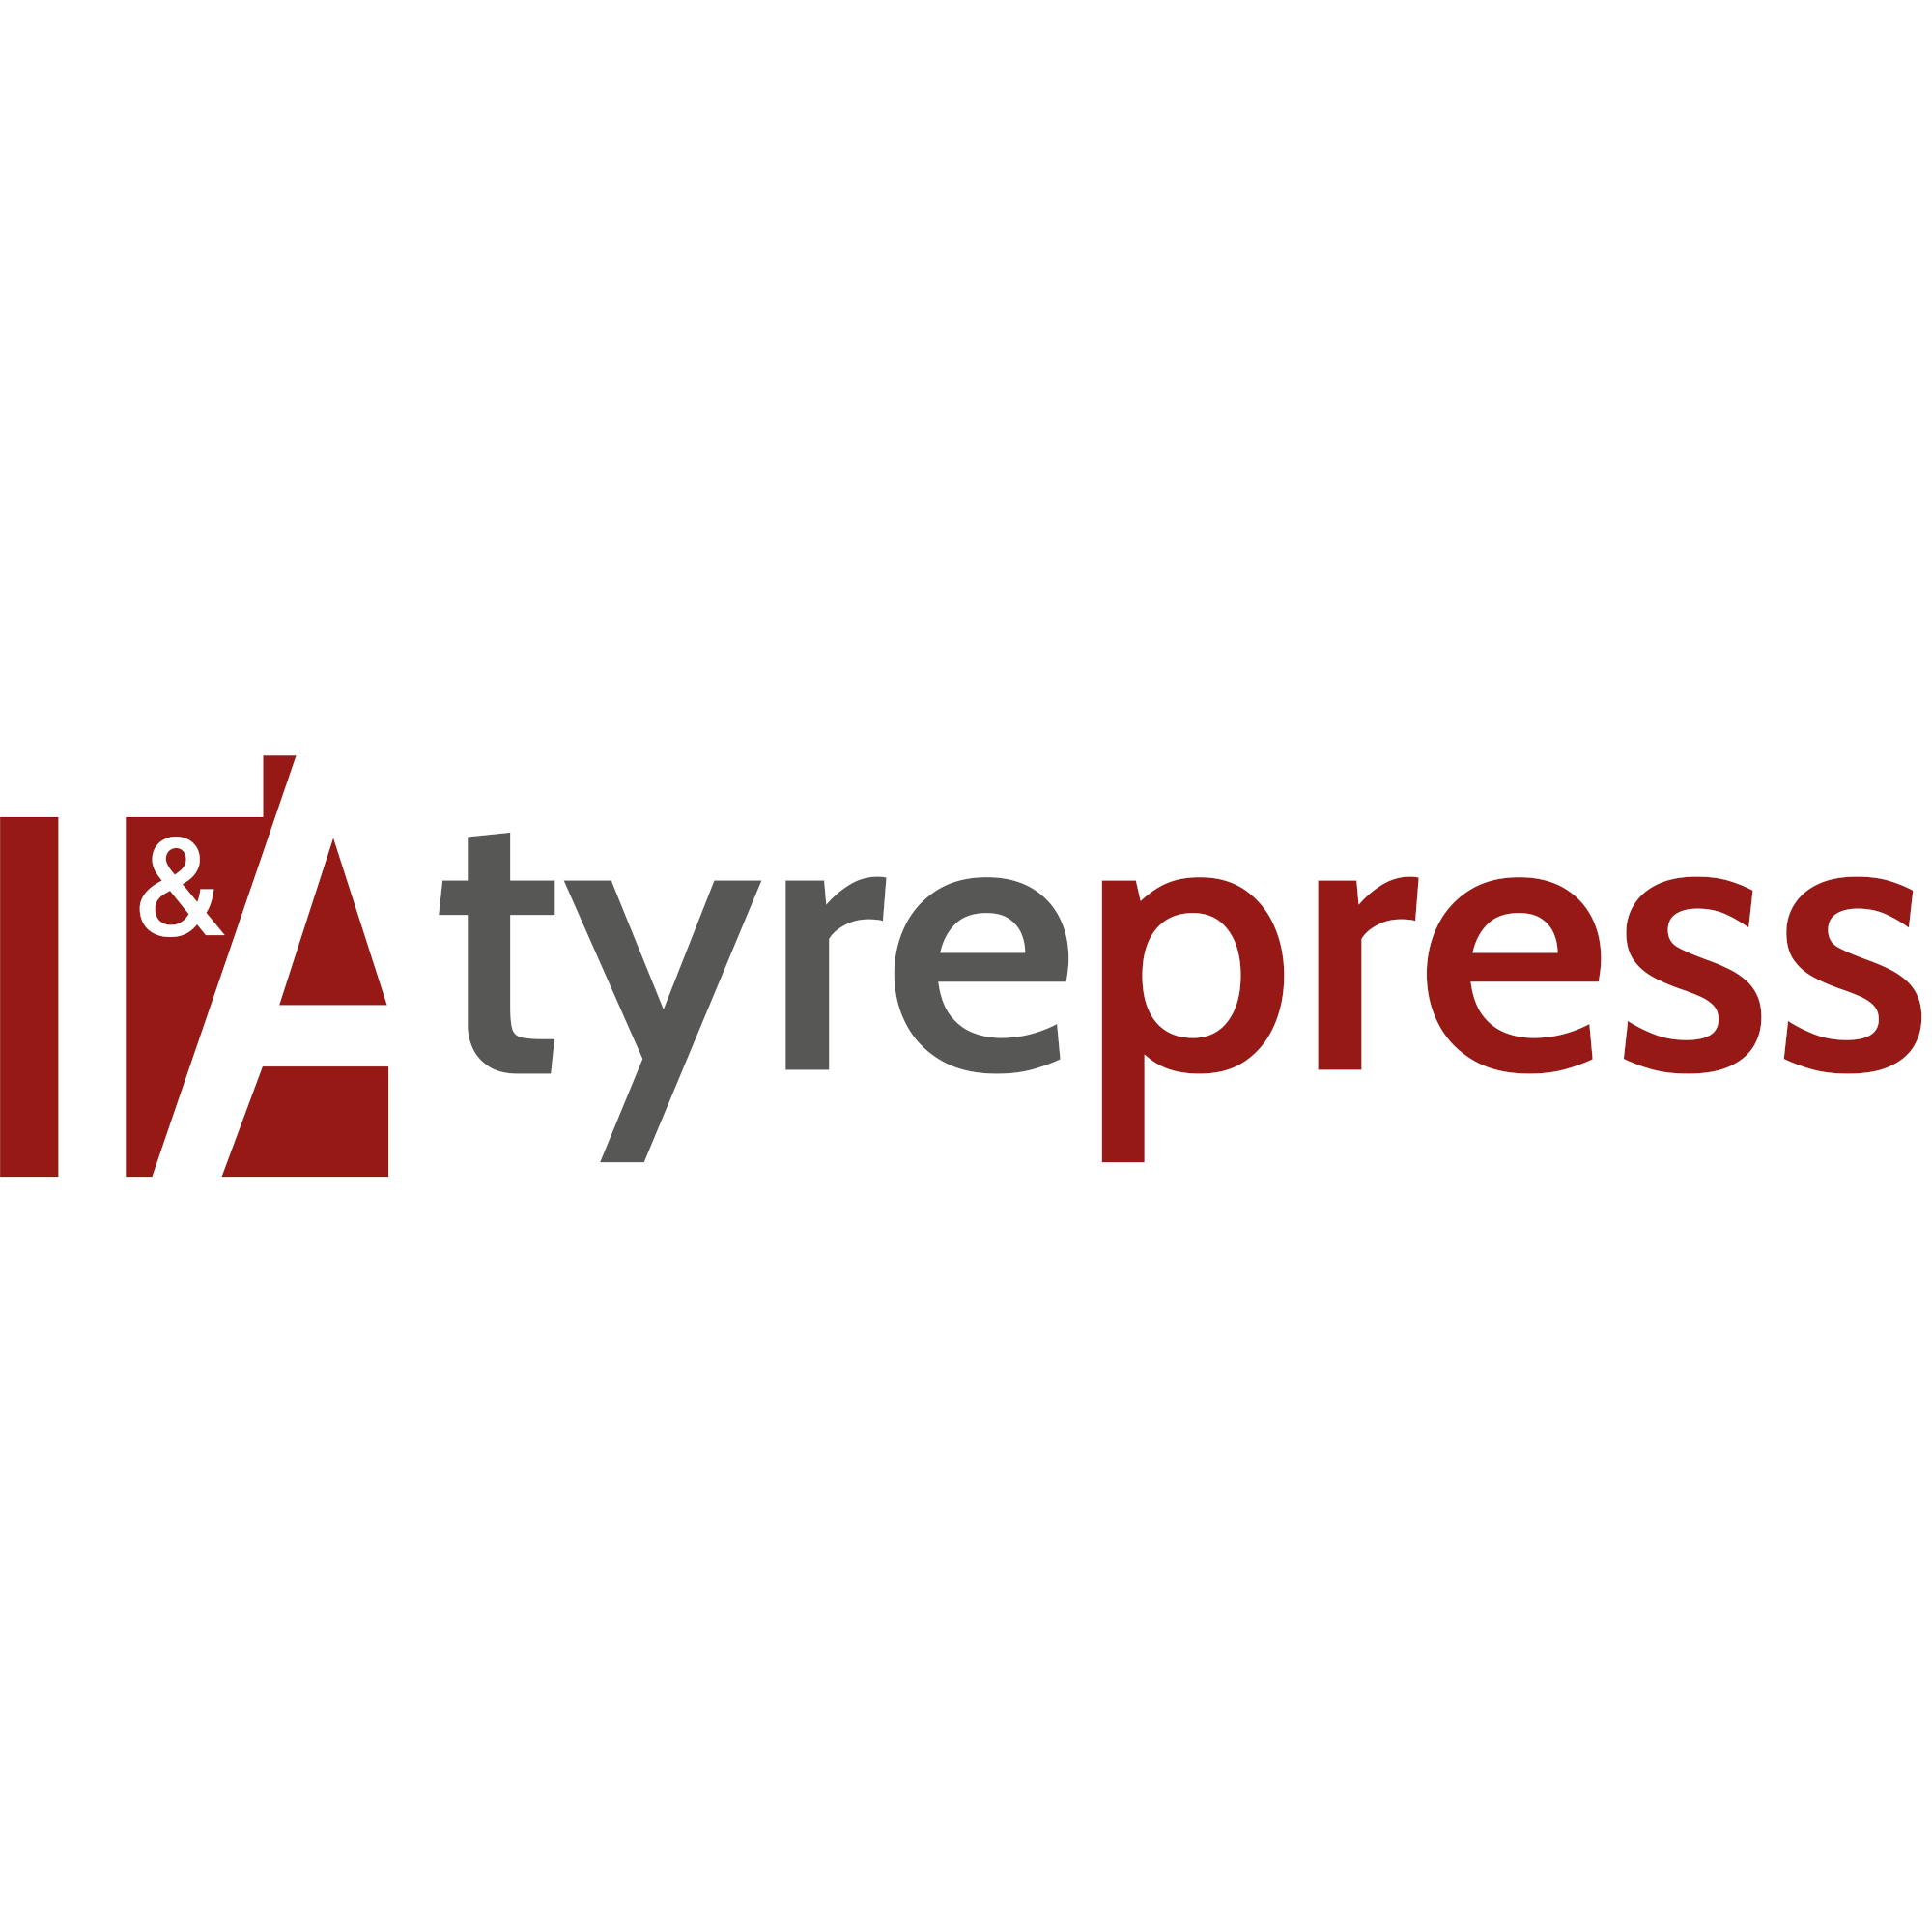 Tyrepress Membership - Tyre Professional Offer